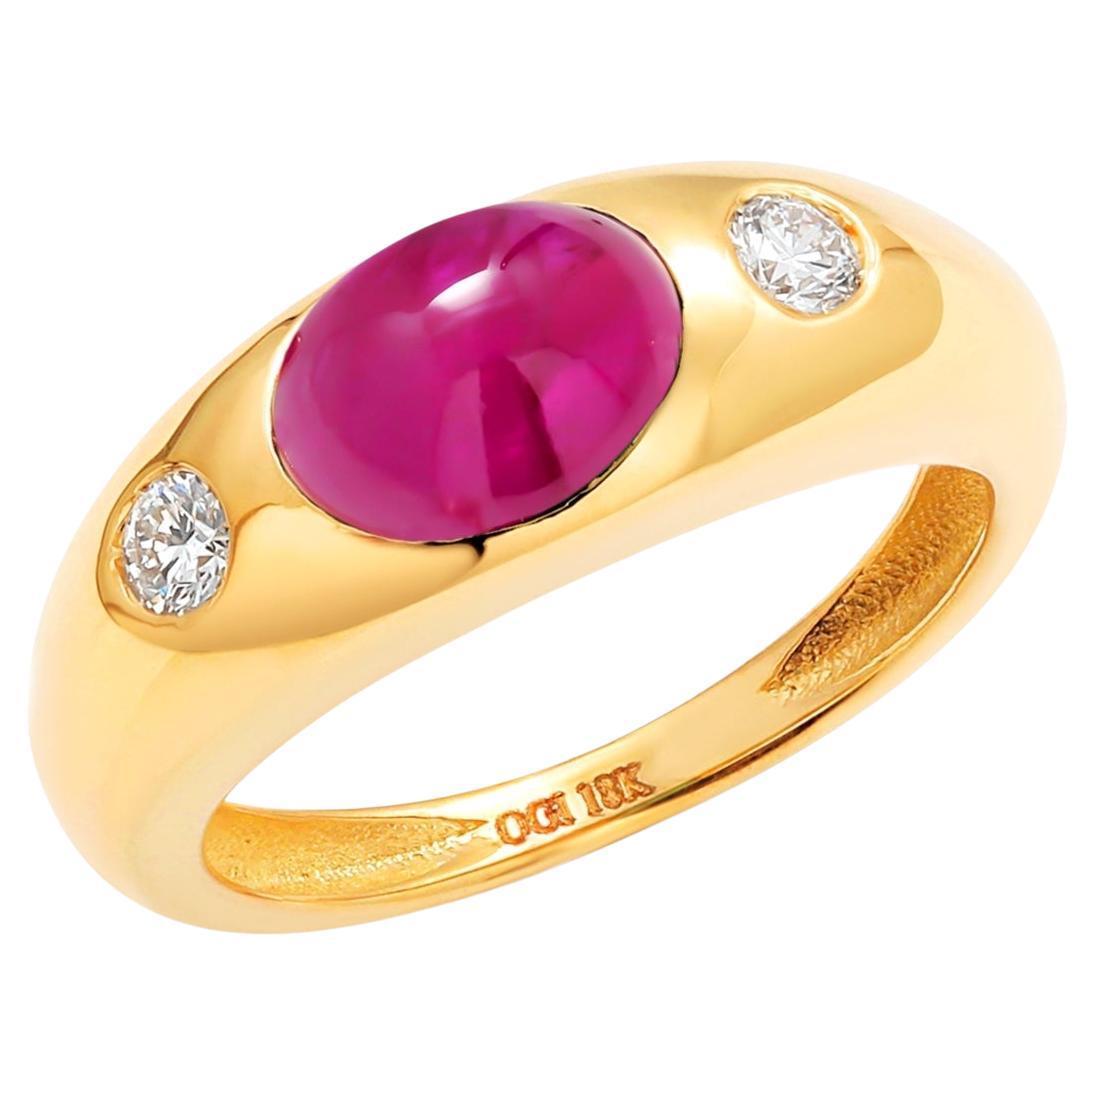 Cabochon Burma Ruby Diamond 2.30 Carat 18 Karat Yellow Gold 3 Stone Ring For Sale